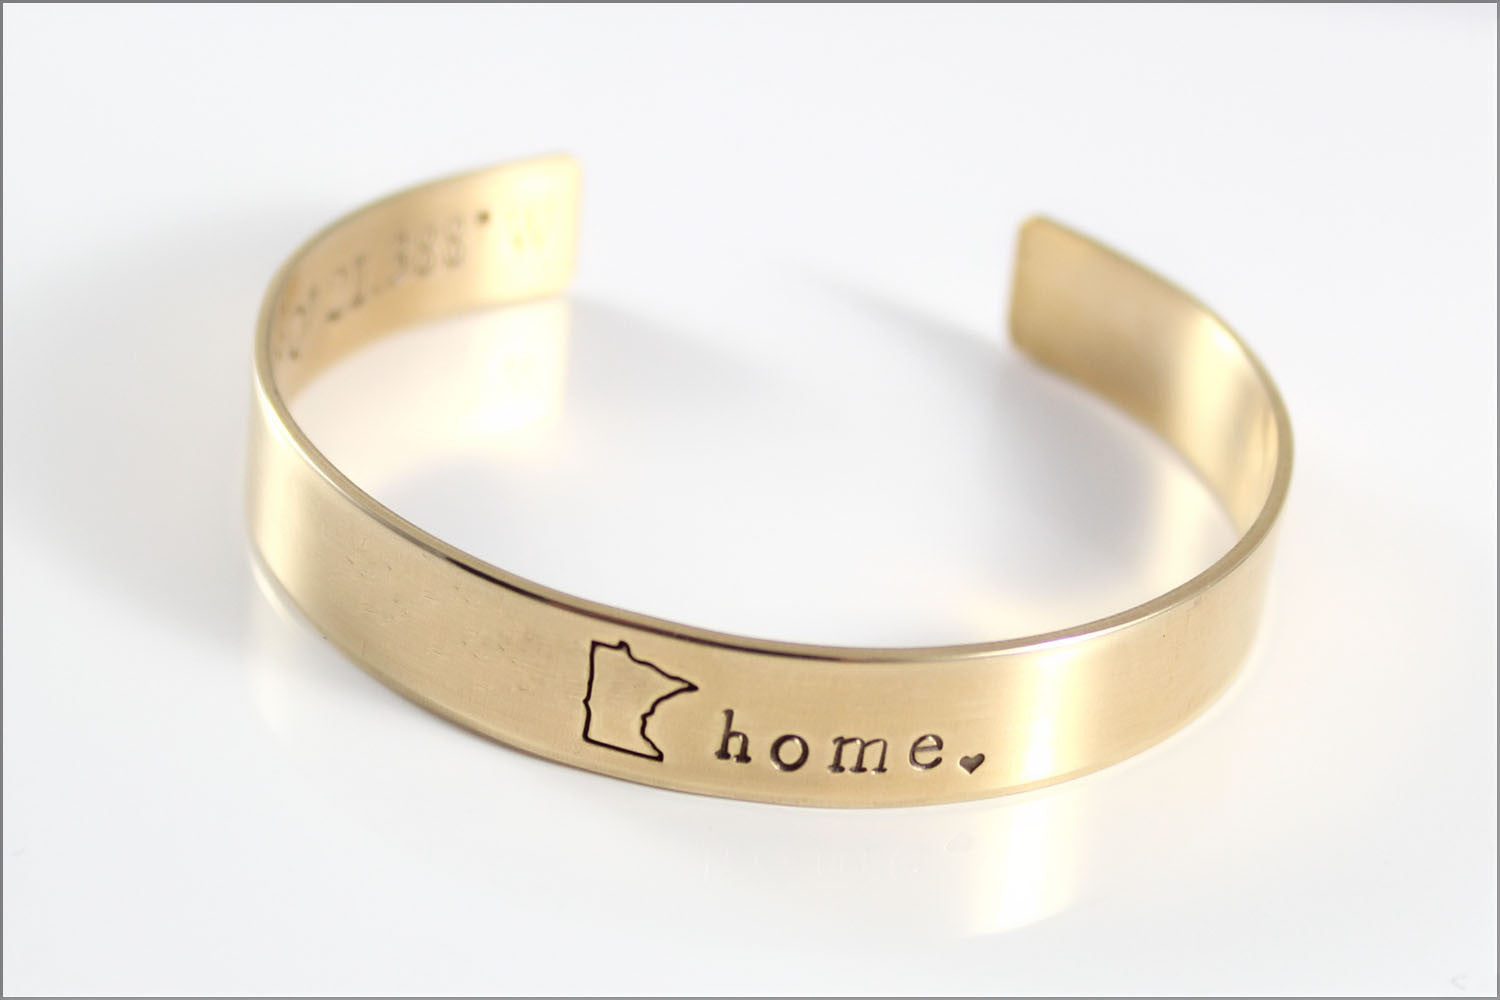 Made just for you – Made just for you custom made designed bracelets and  memorial bracelets